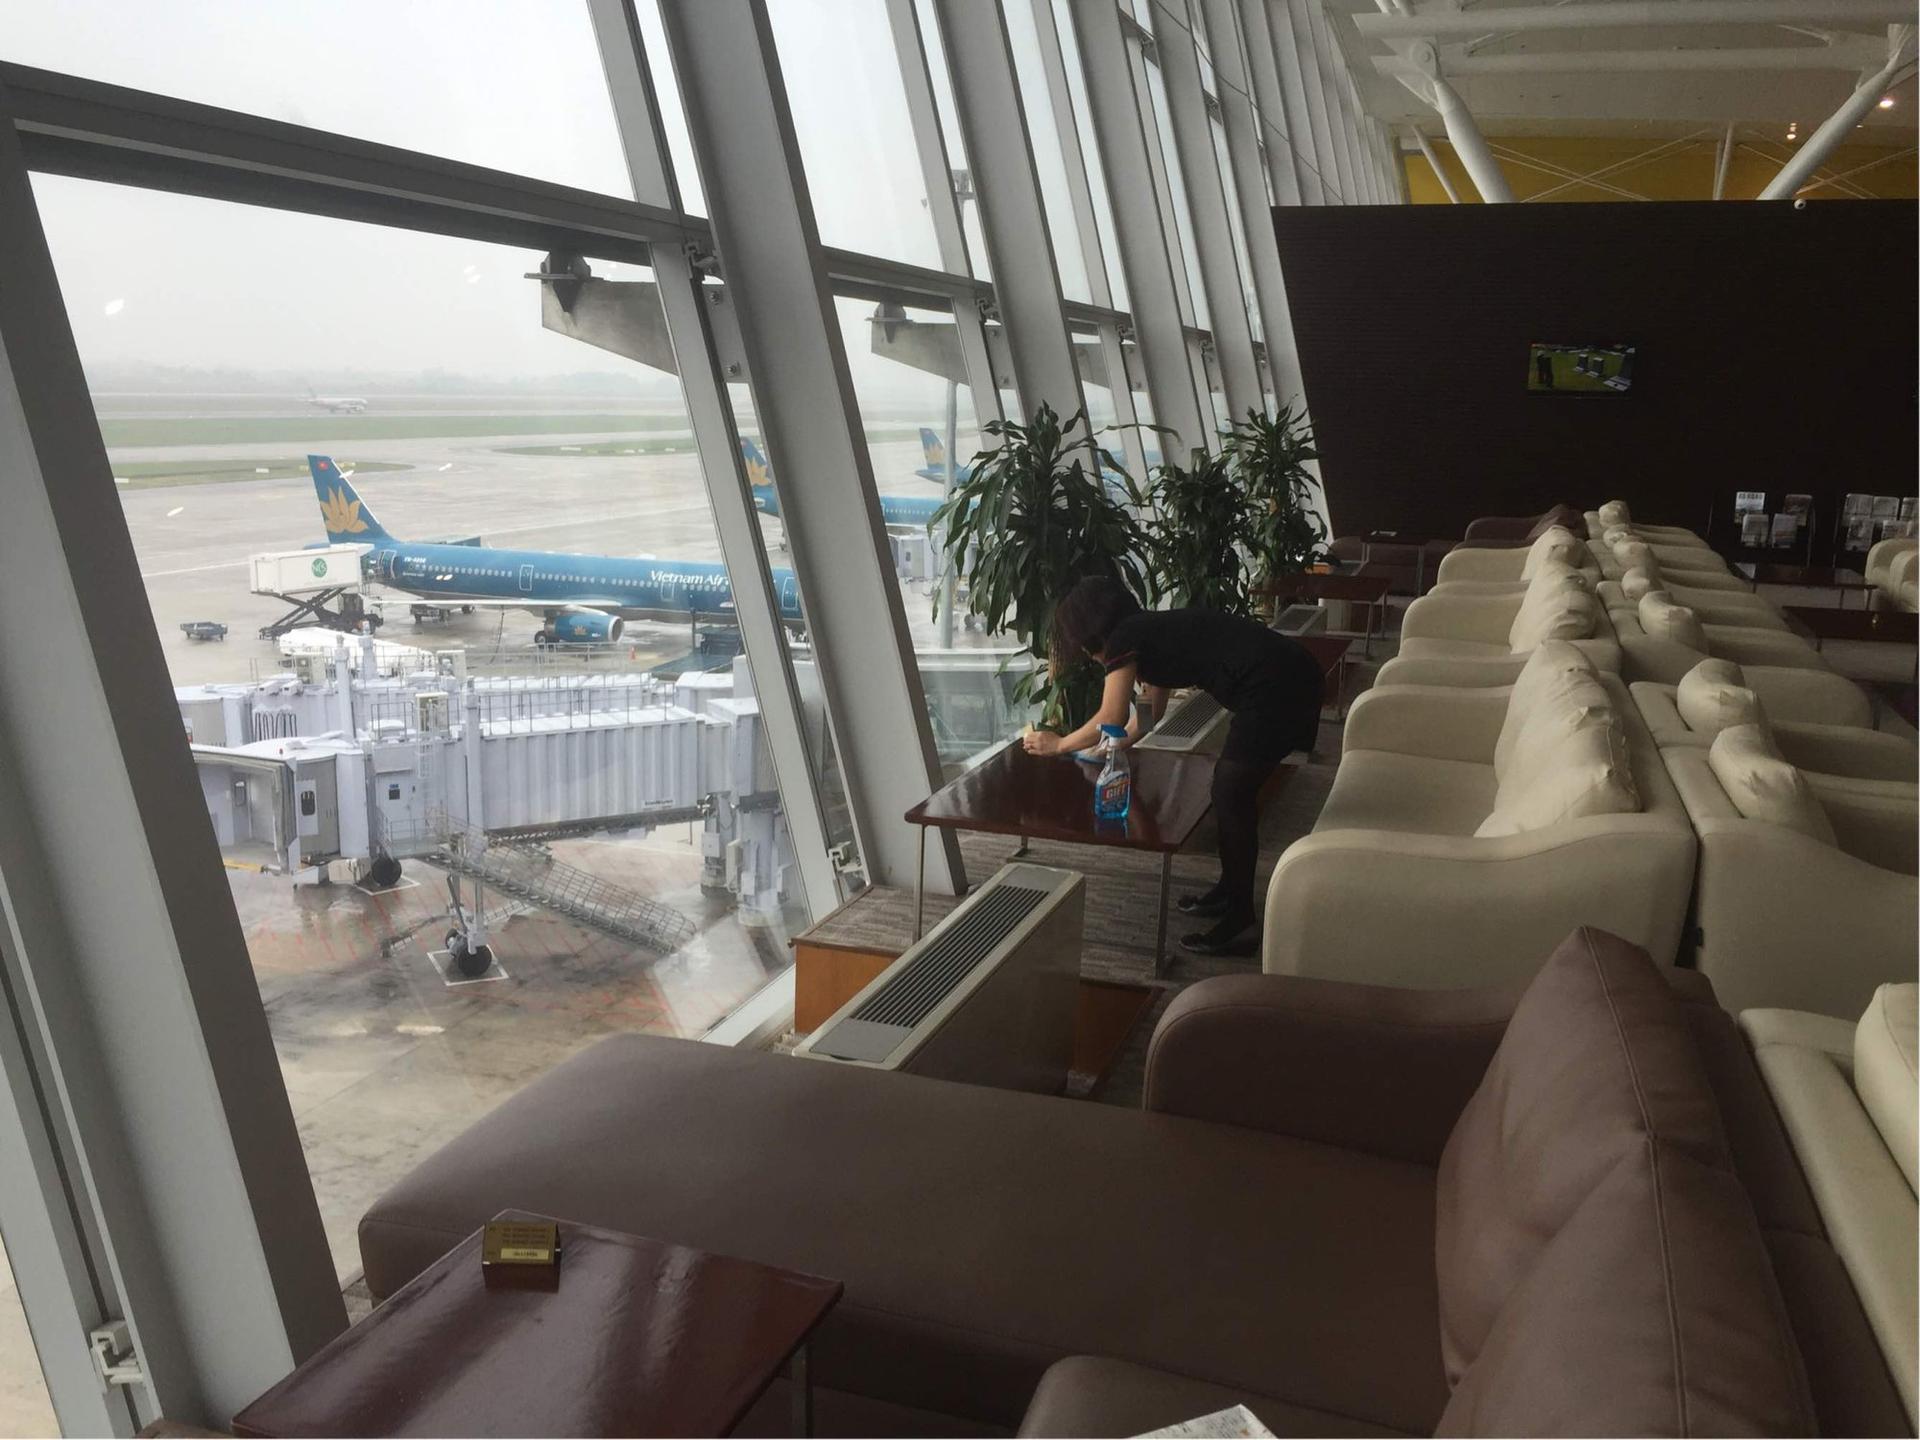 Noi Bai International Airport Business Lounge image 13 of 26